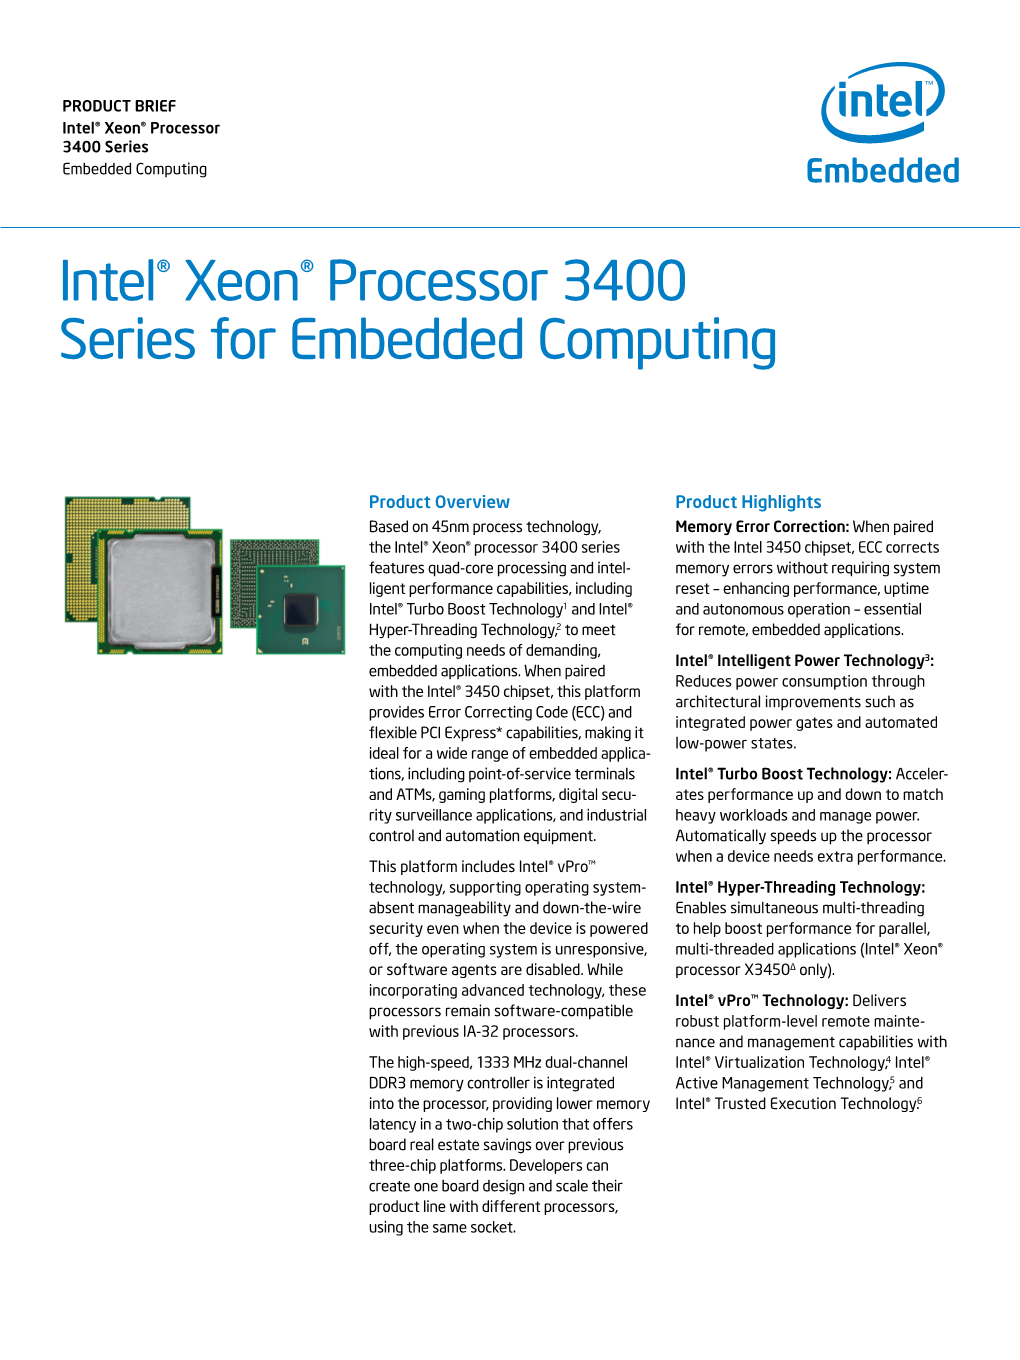 Intel® Xeon® Processor 3400 Series for Embedded Computing